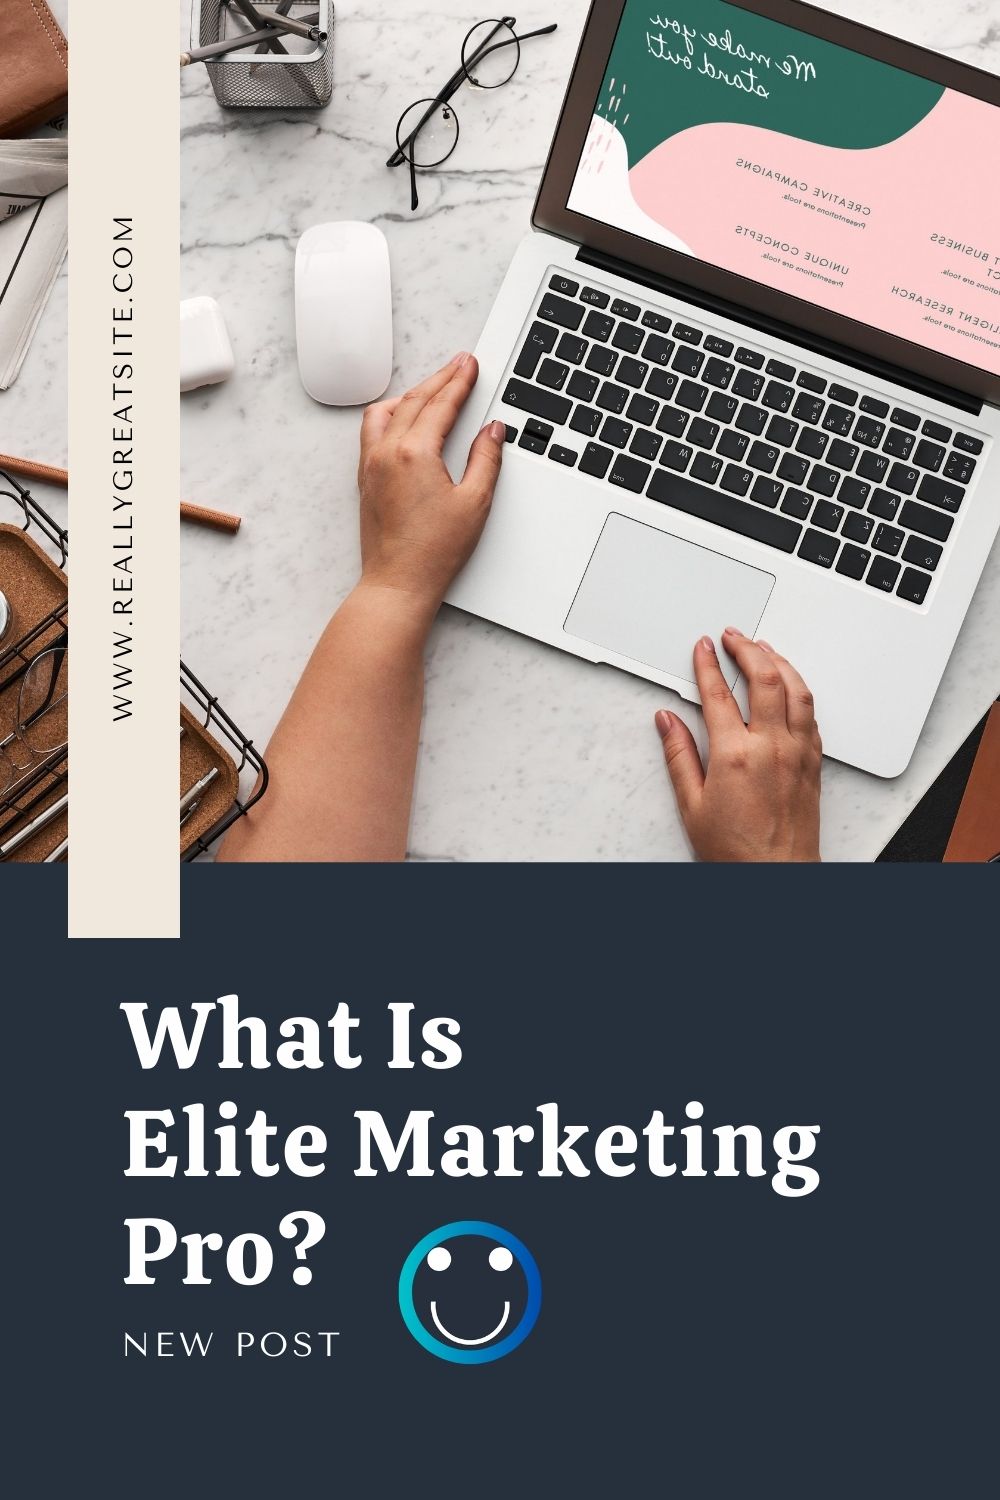 What Is Elite Marketing Pro?